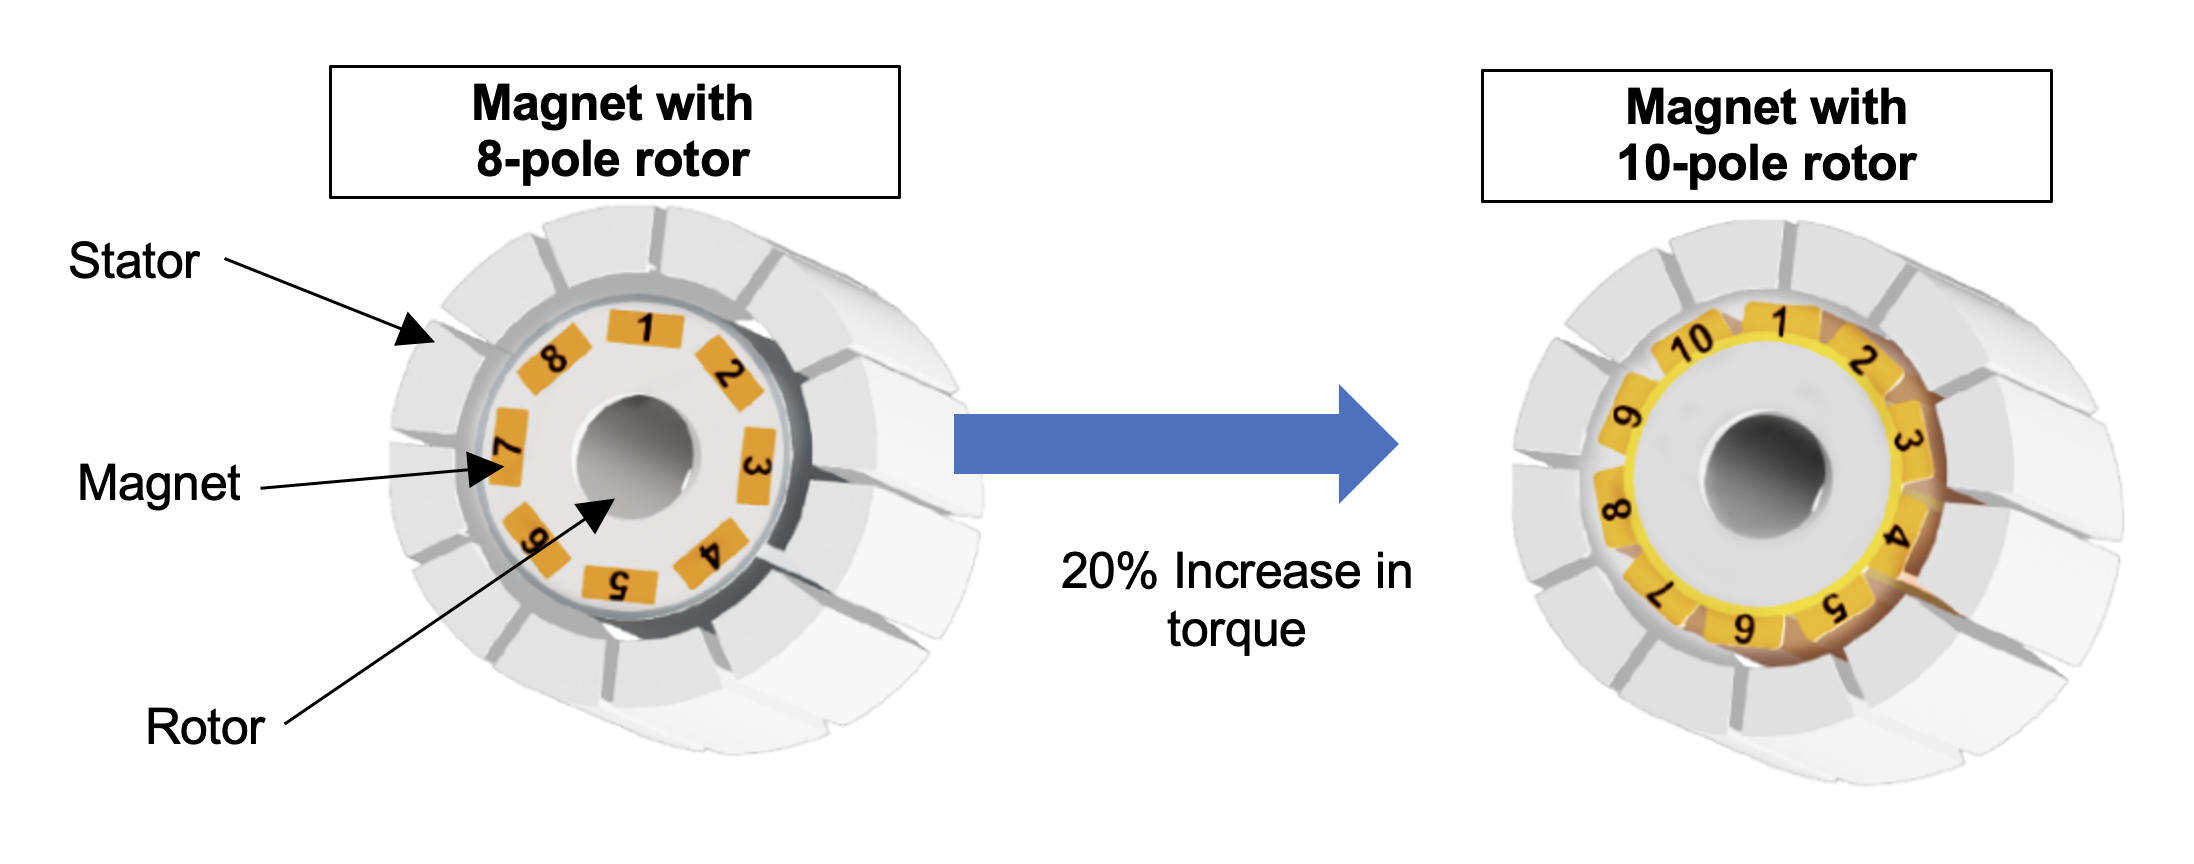 twenty percent increase in torque